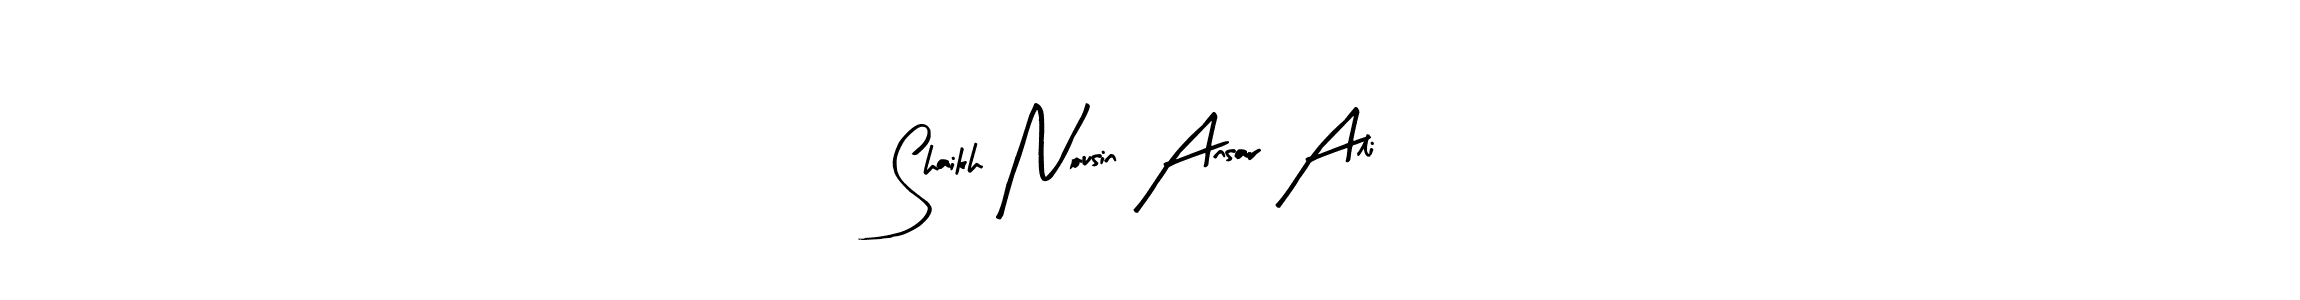 Shaikh Nousin Ansar Ali stylish signature style. Best Handwritten Sign (Arty Signature) for my name. Handwritten Signature Collection Ideas for my name Shaikh Nousin Ansar Ali. Shaikh Nousin Ansar Ali signature style 8 images and pictures png